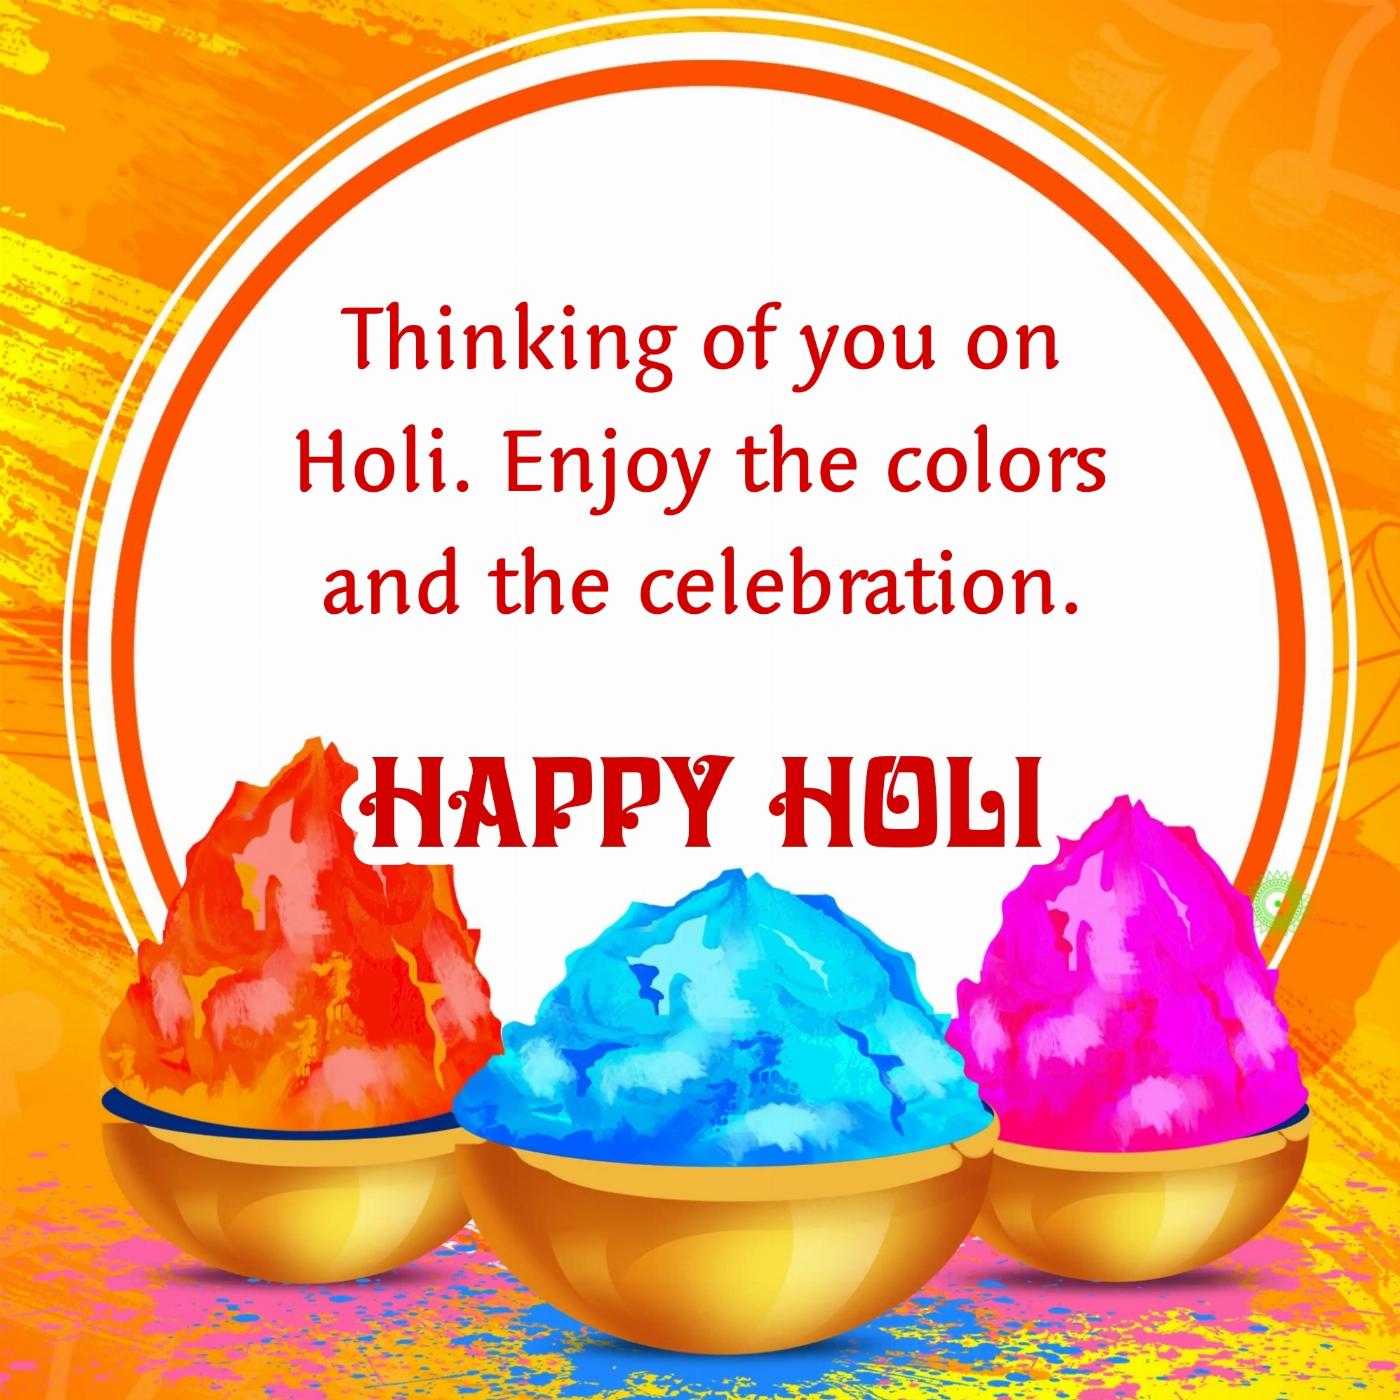 Thinking of you on Holi Enjoy the colors and the celebration